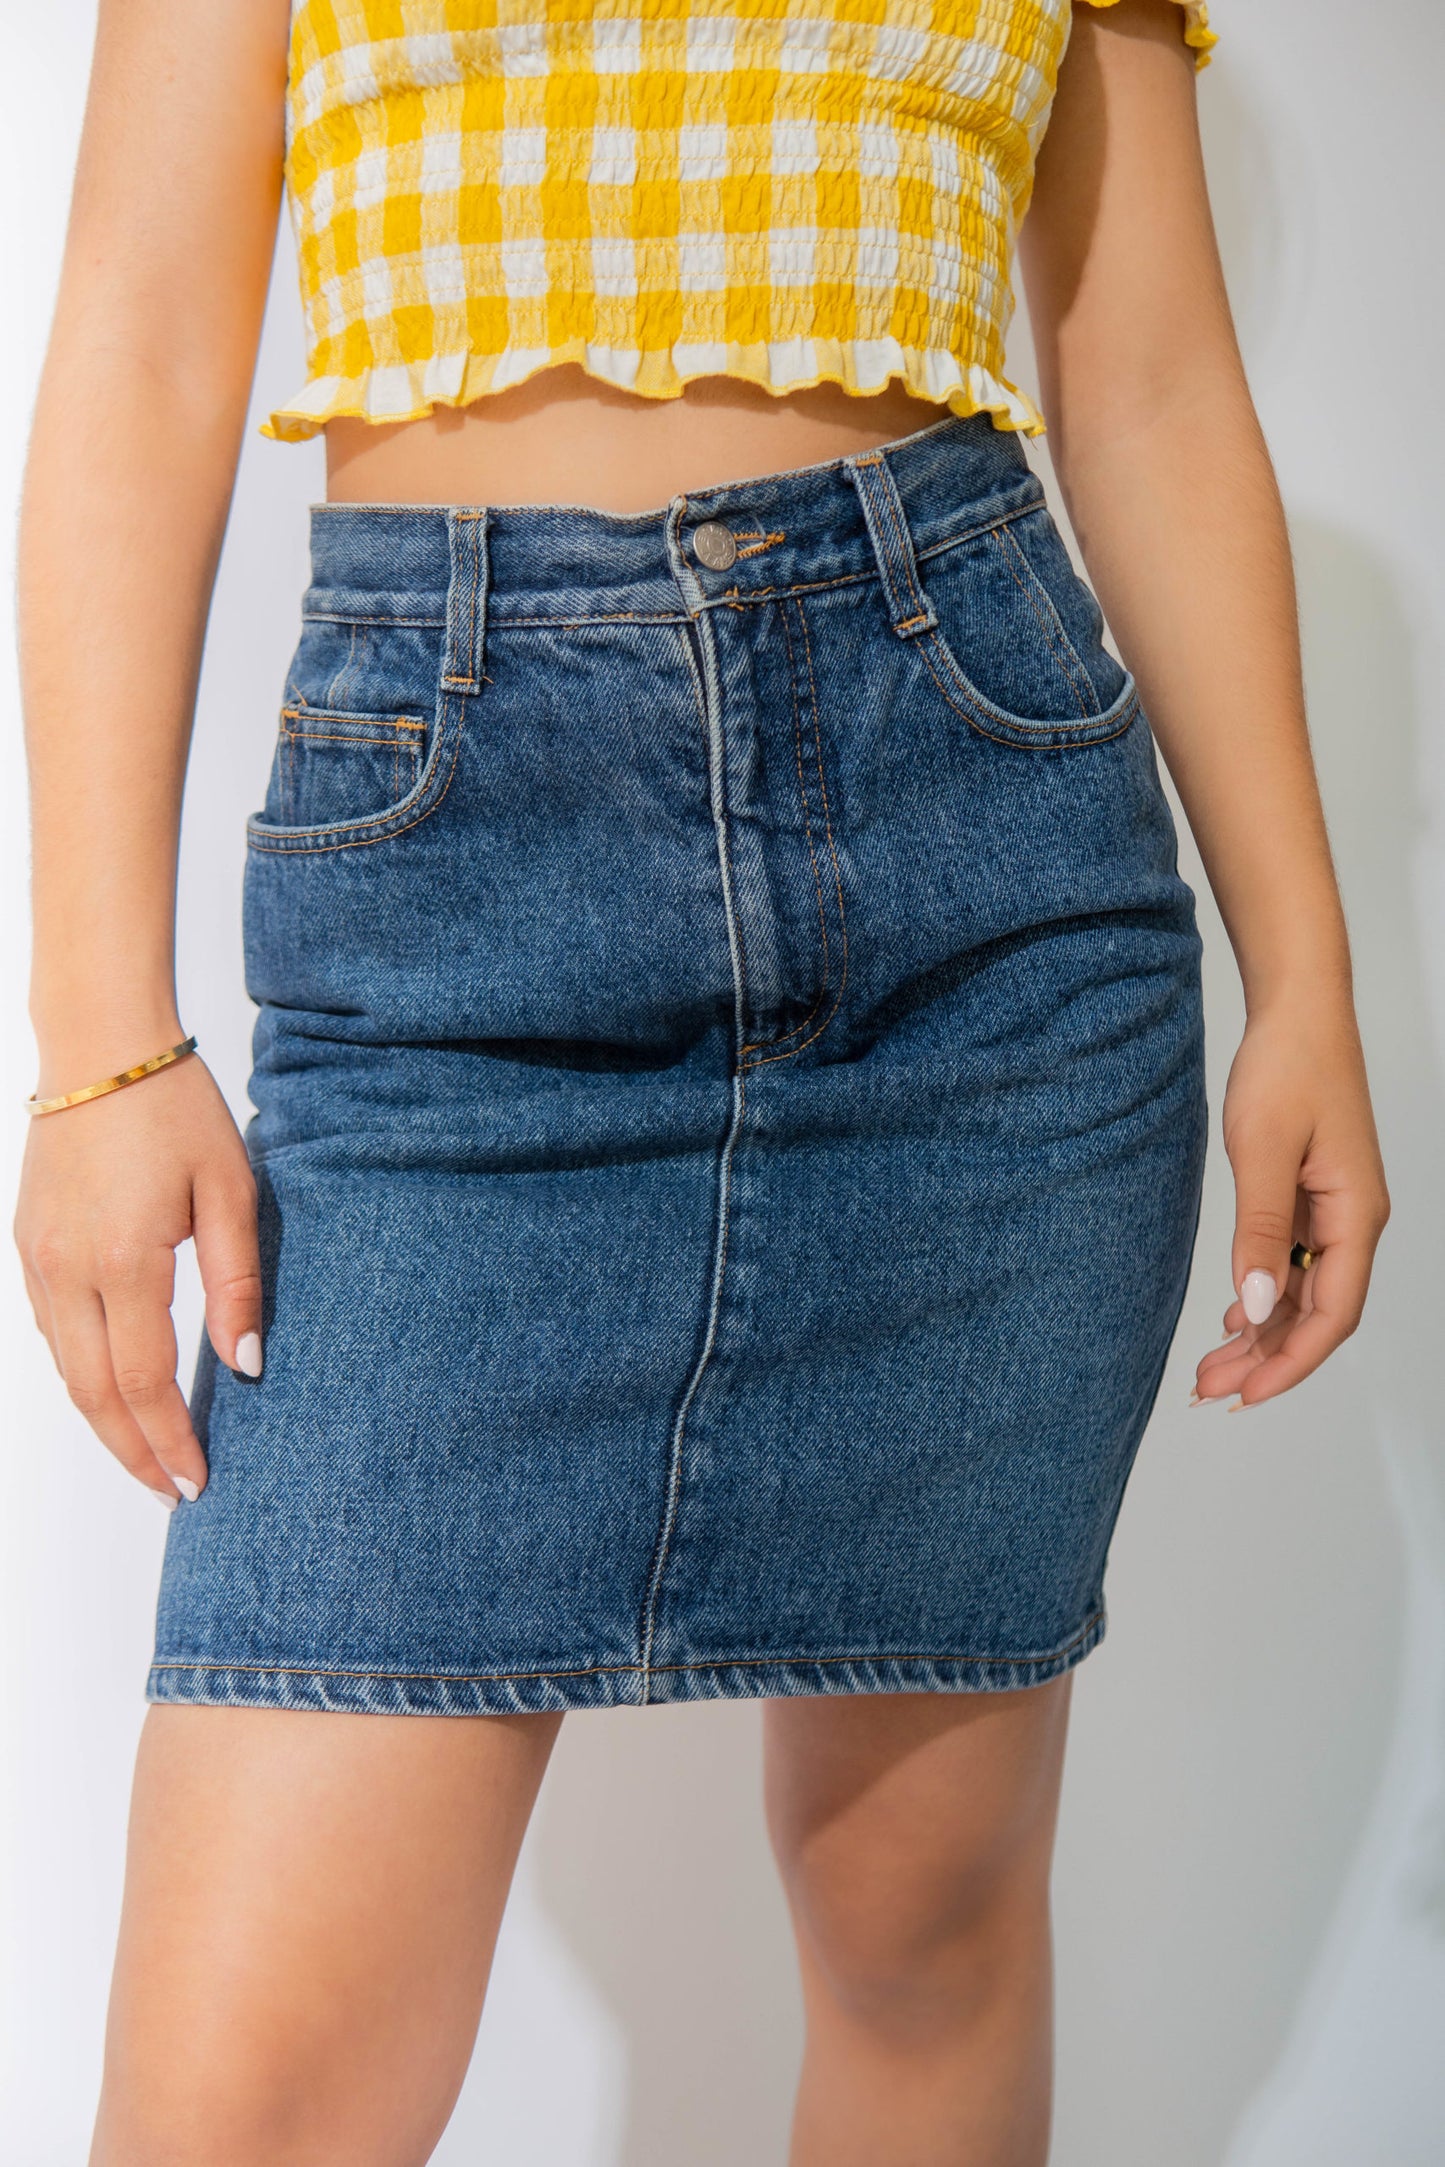 Vintage Esprit Skirt[36]